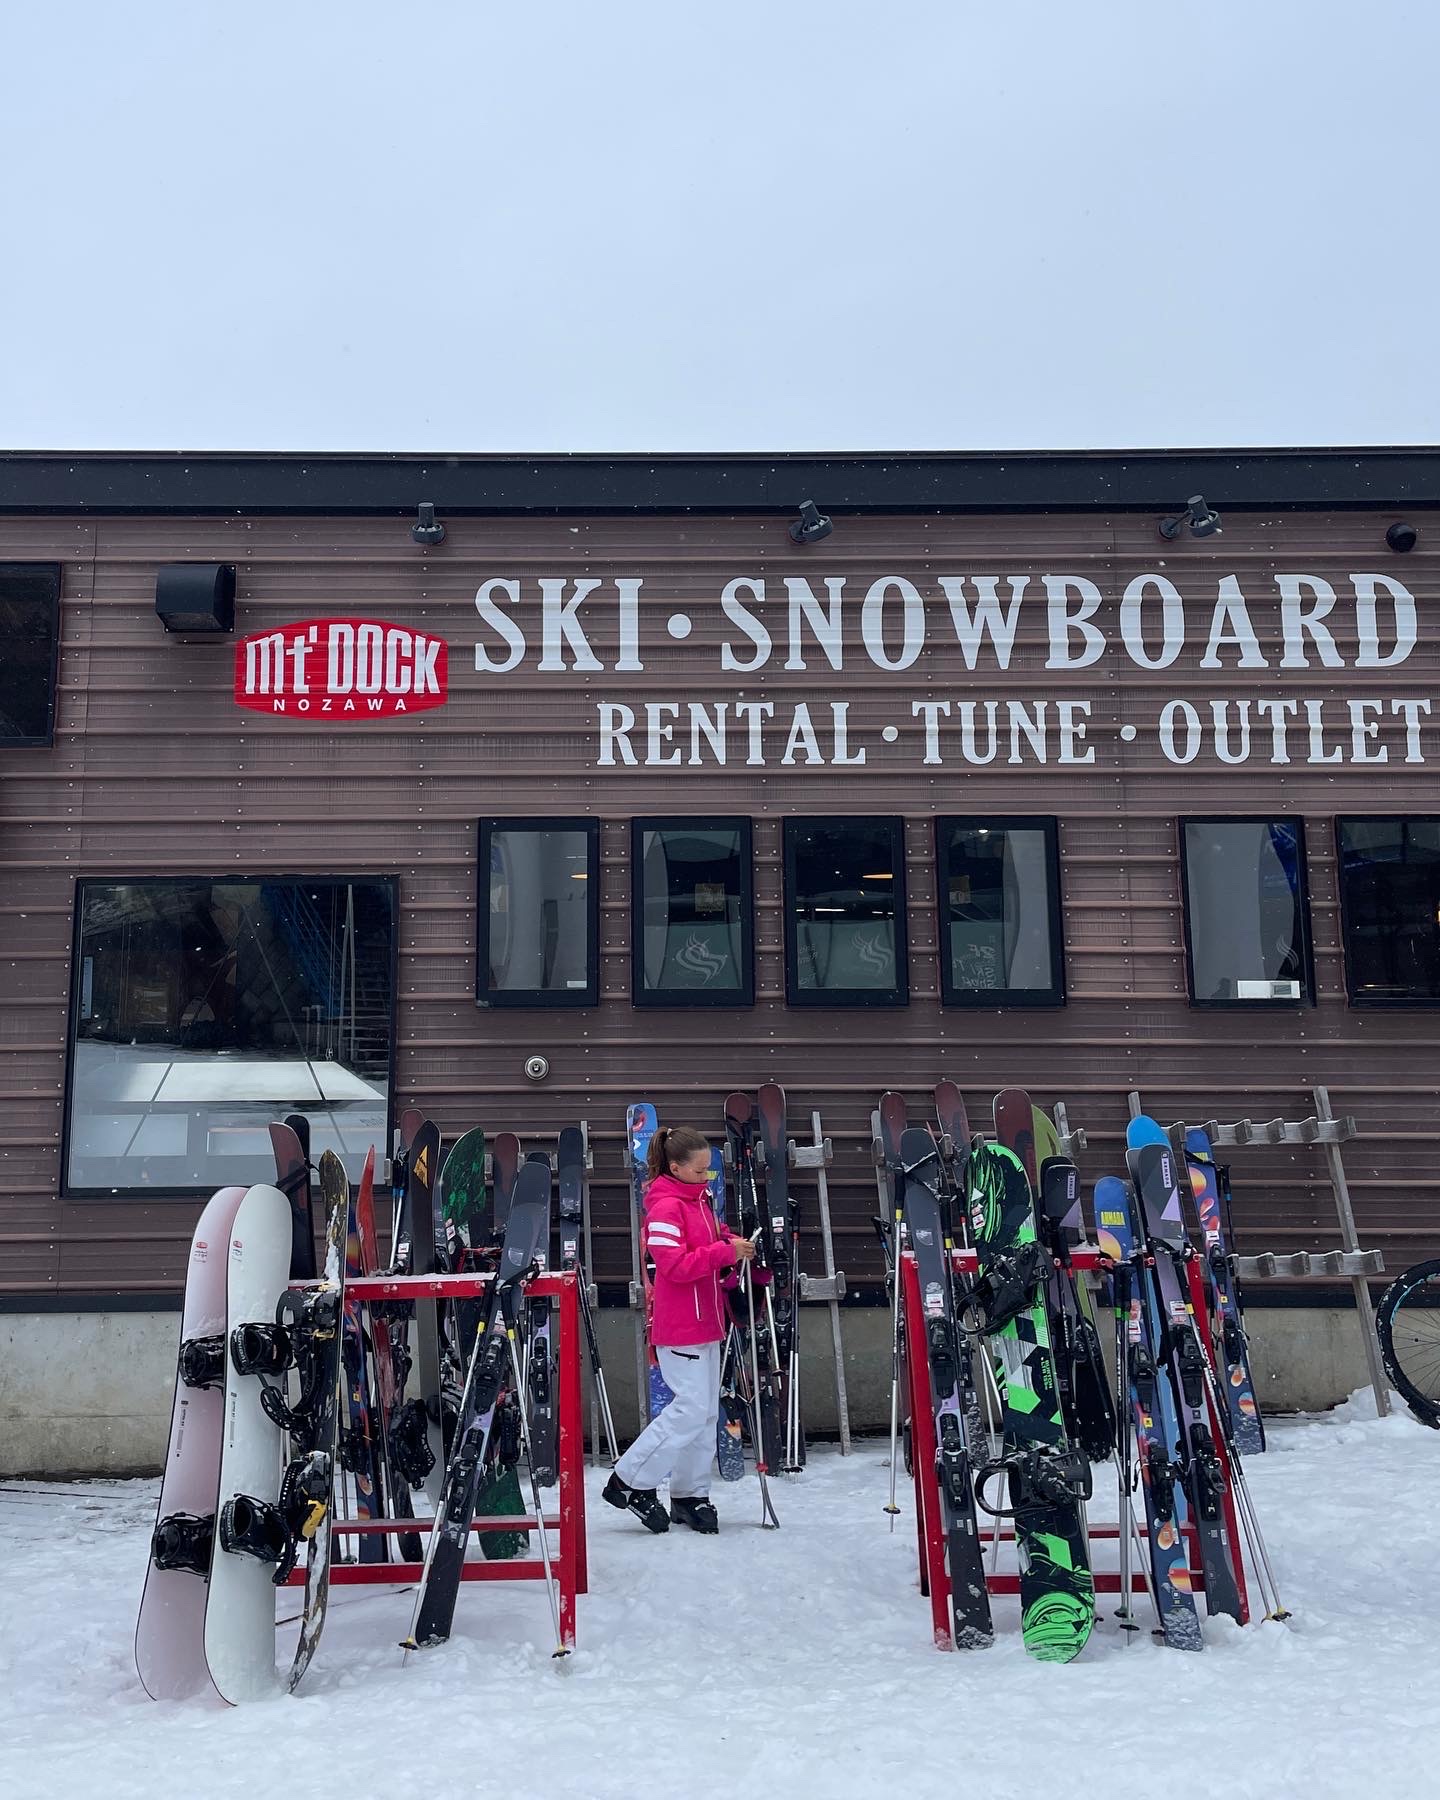 Mt Dock Ski and Snowboard Rental, Cafe and Outlet